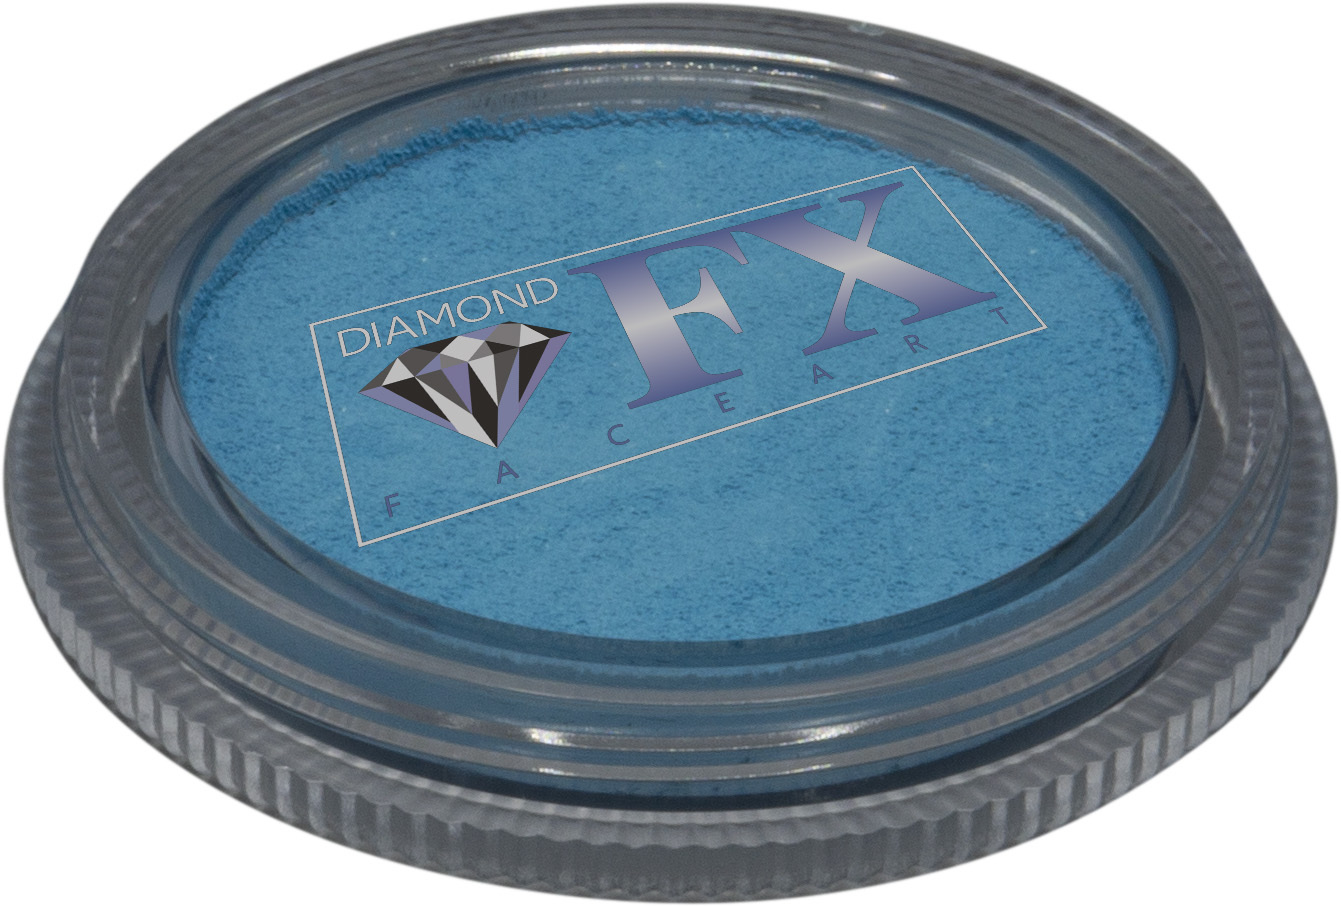 Diamond FX Azure Light 30g - Small Image